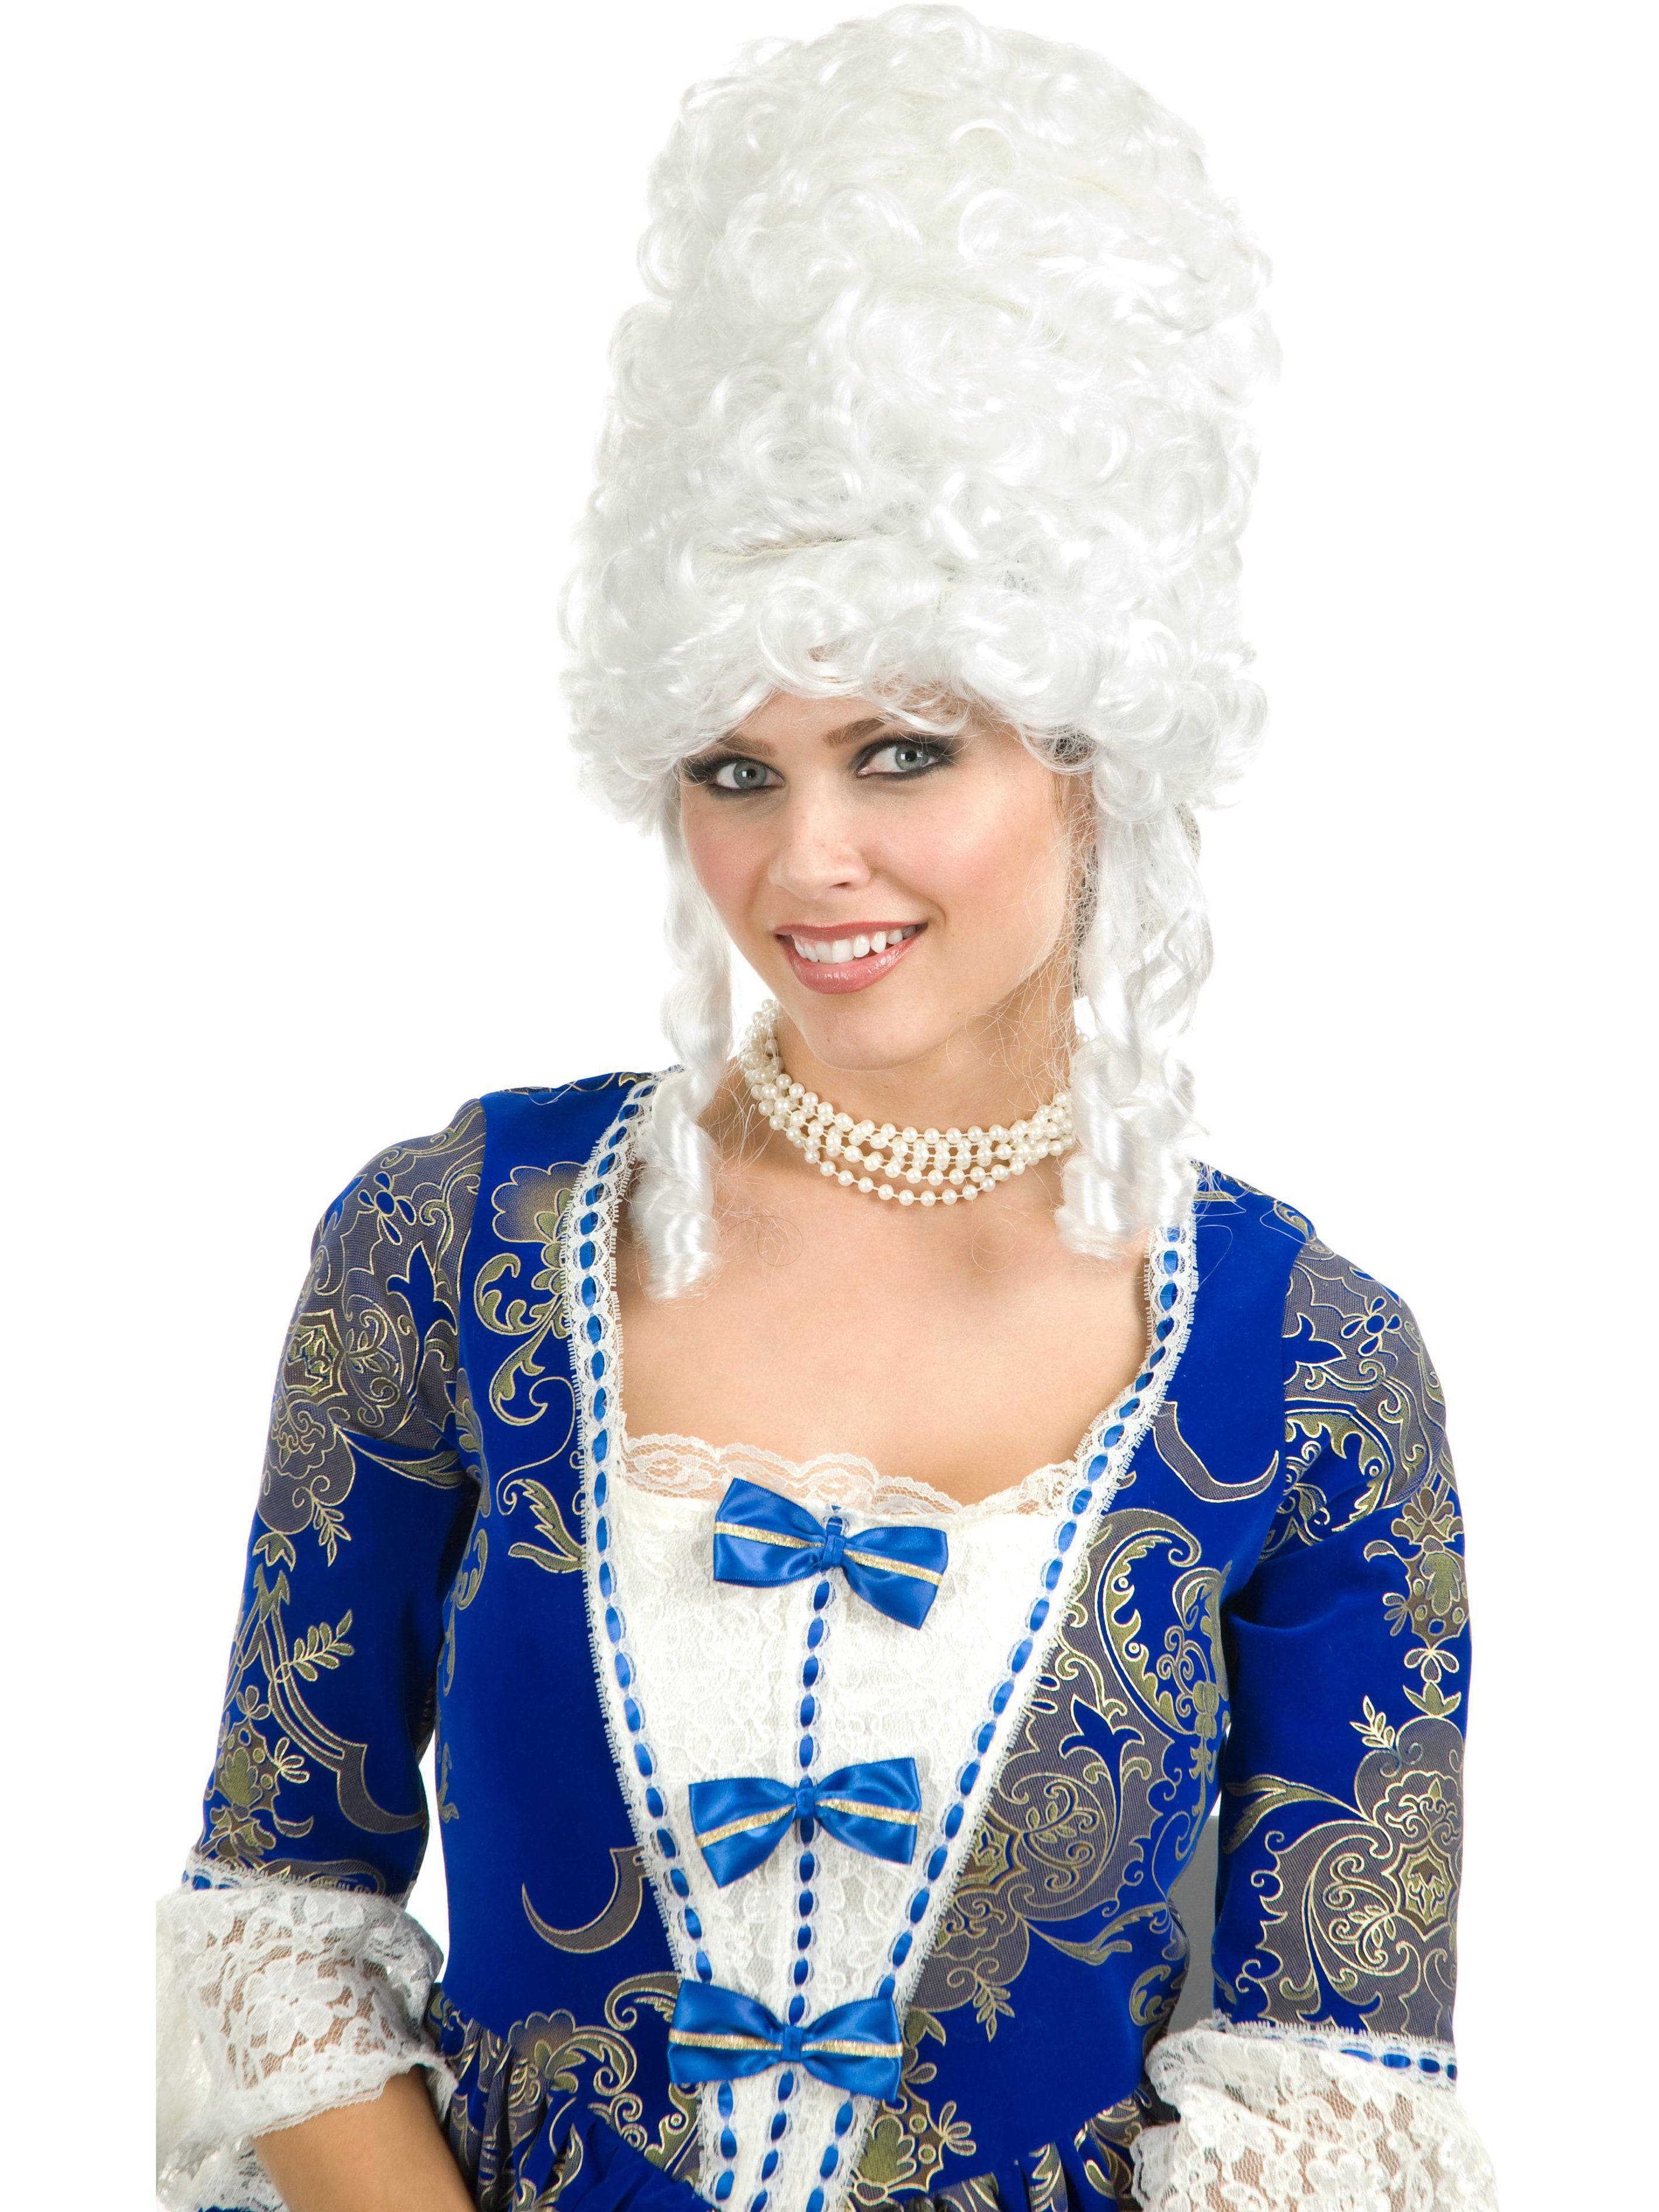 Women's White Baroque Marie Antoinette Wig - costumes.com